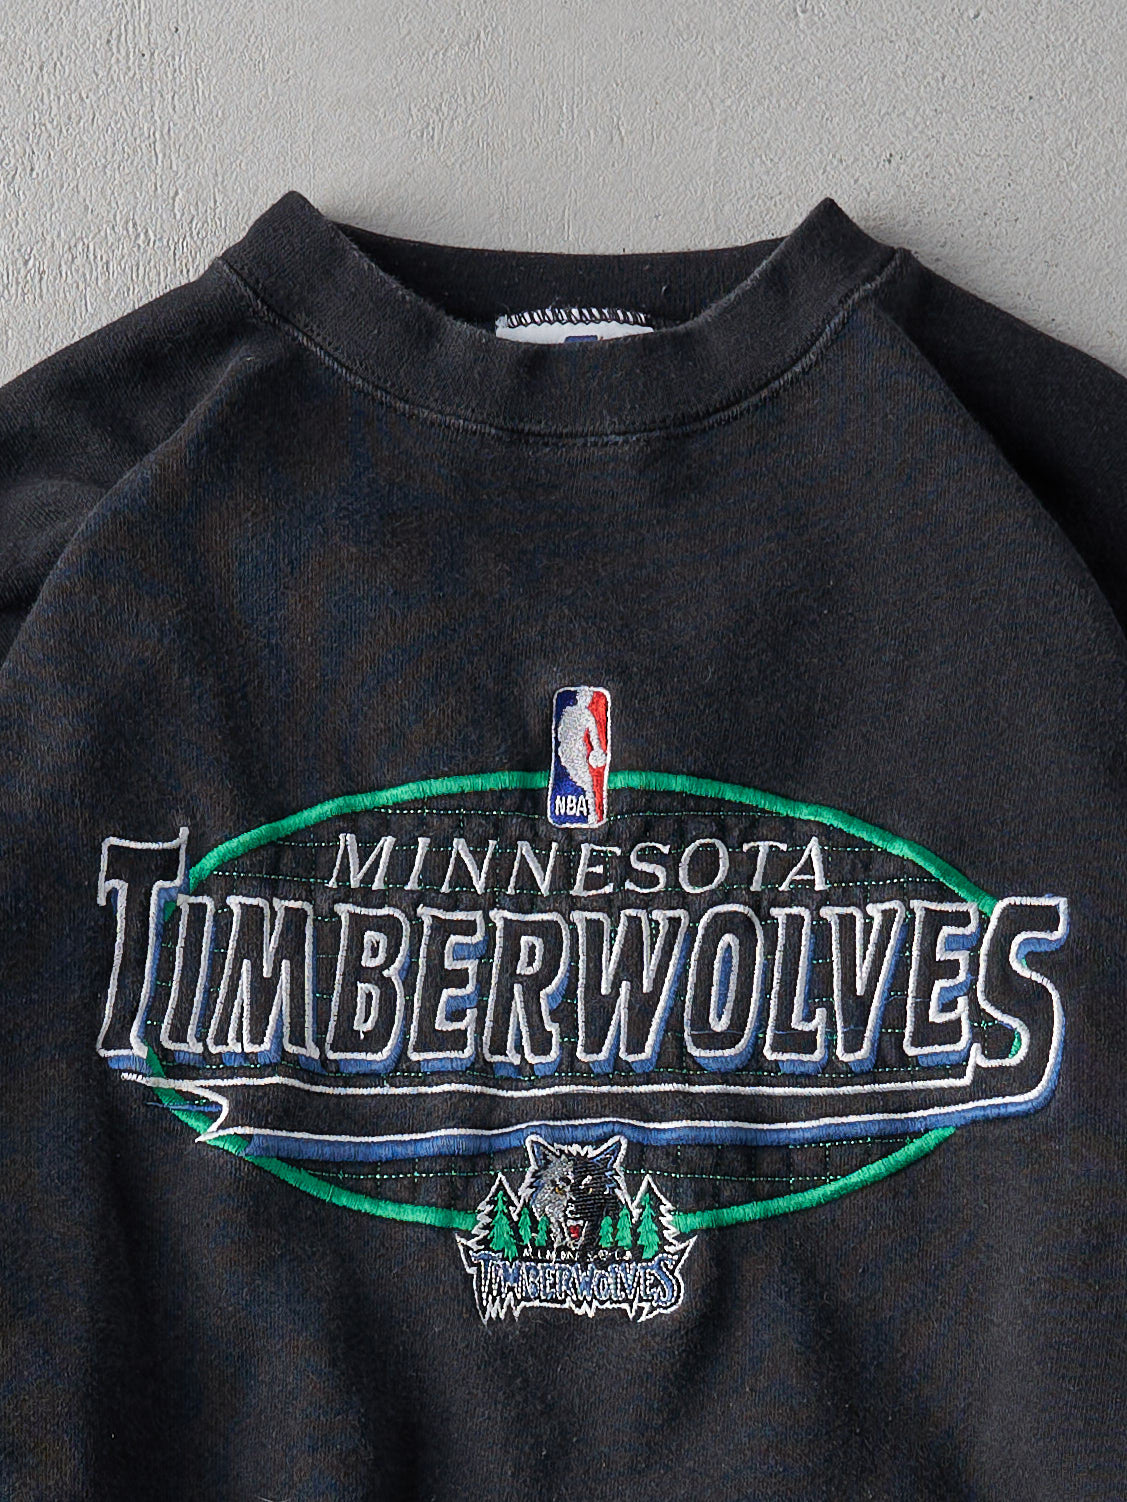 Vintage 90s Black Minnesota Timberwolves Embroidered Crewneck (L)